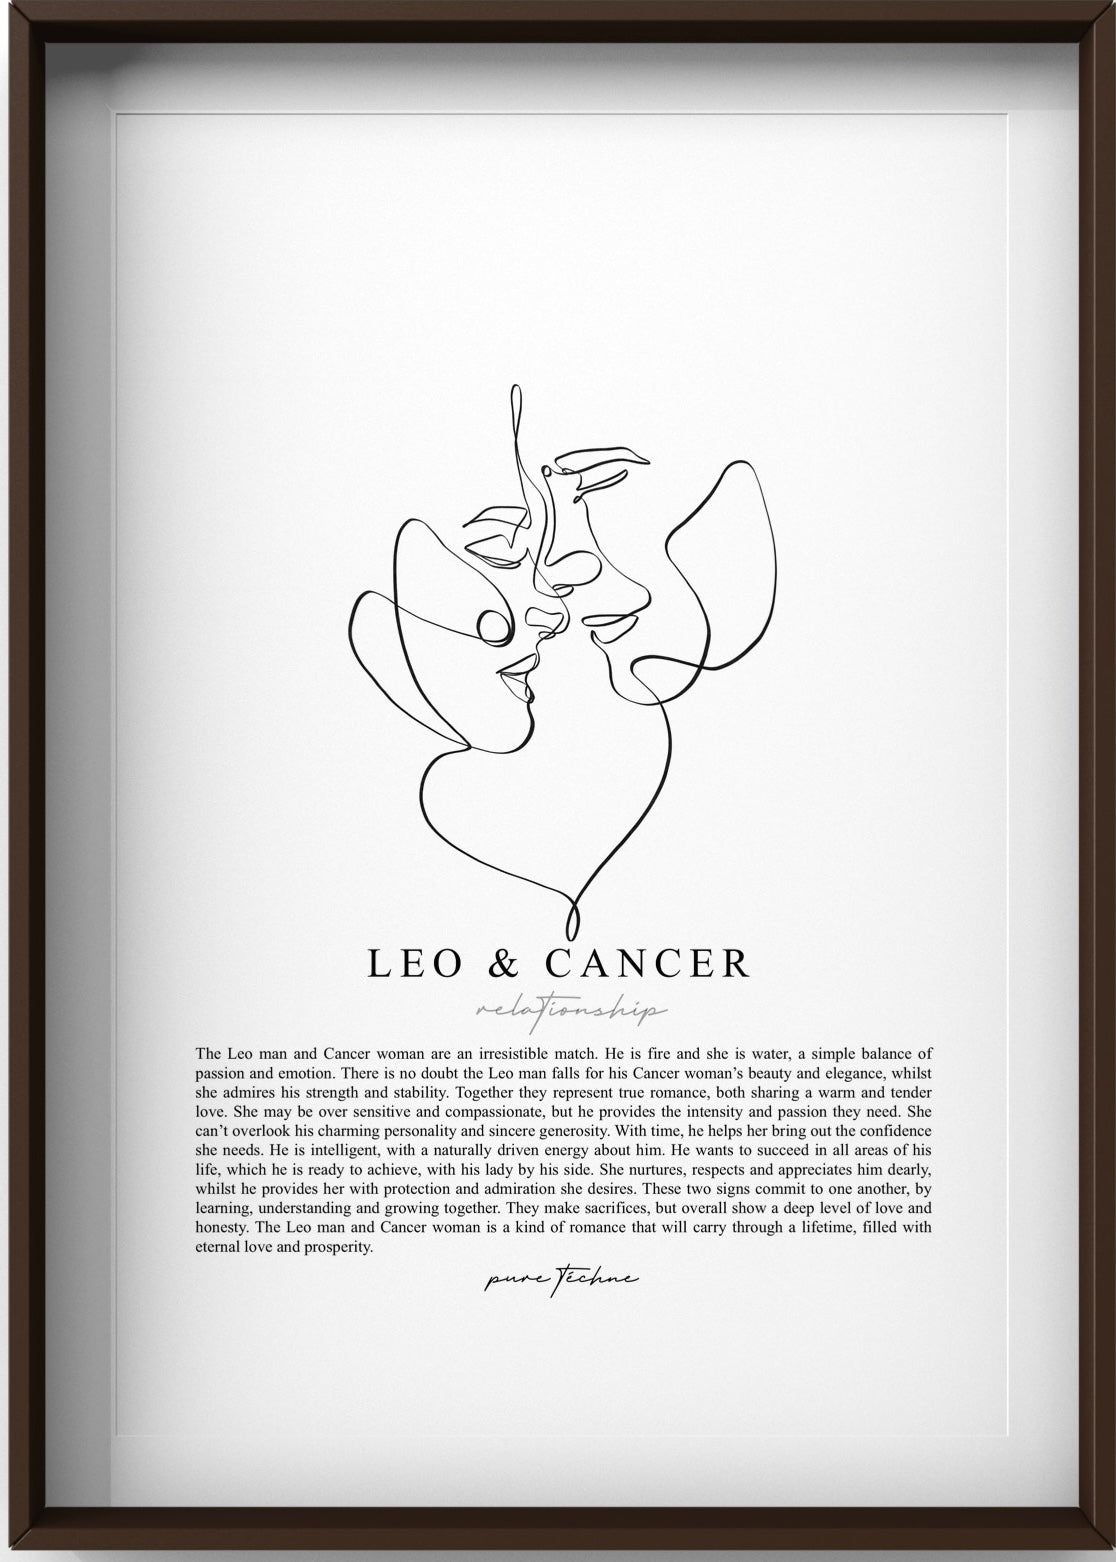 Leo Man & Cancer Woman